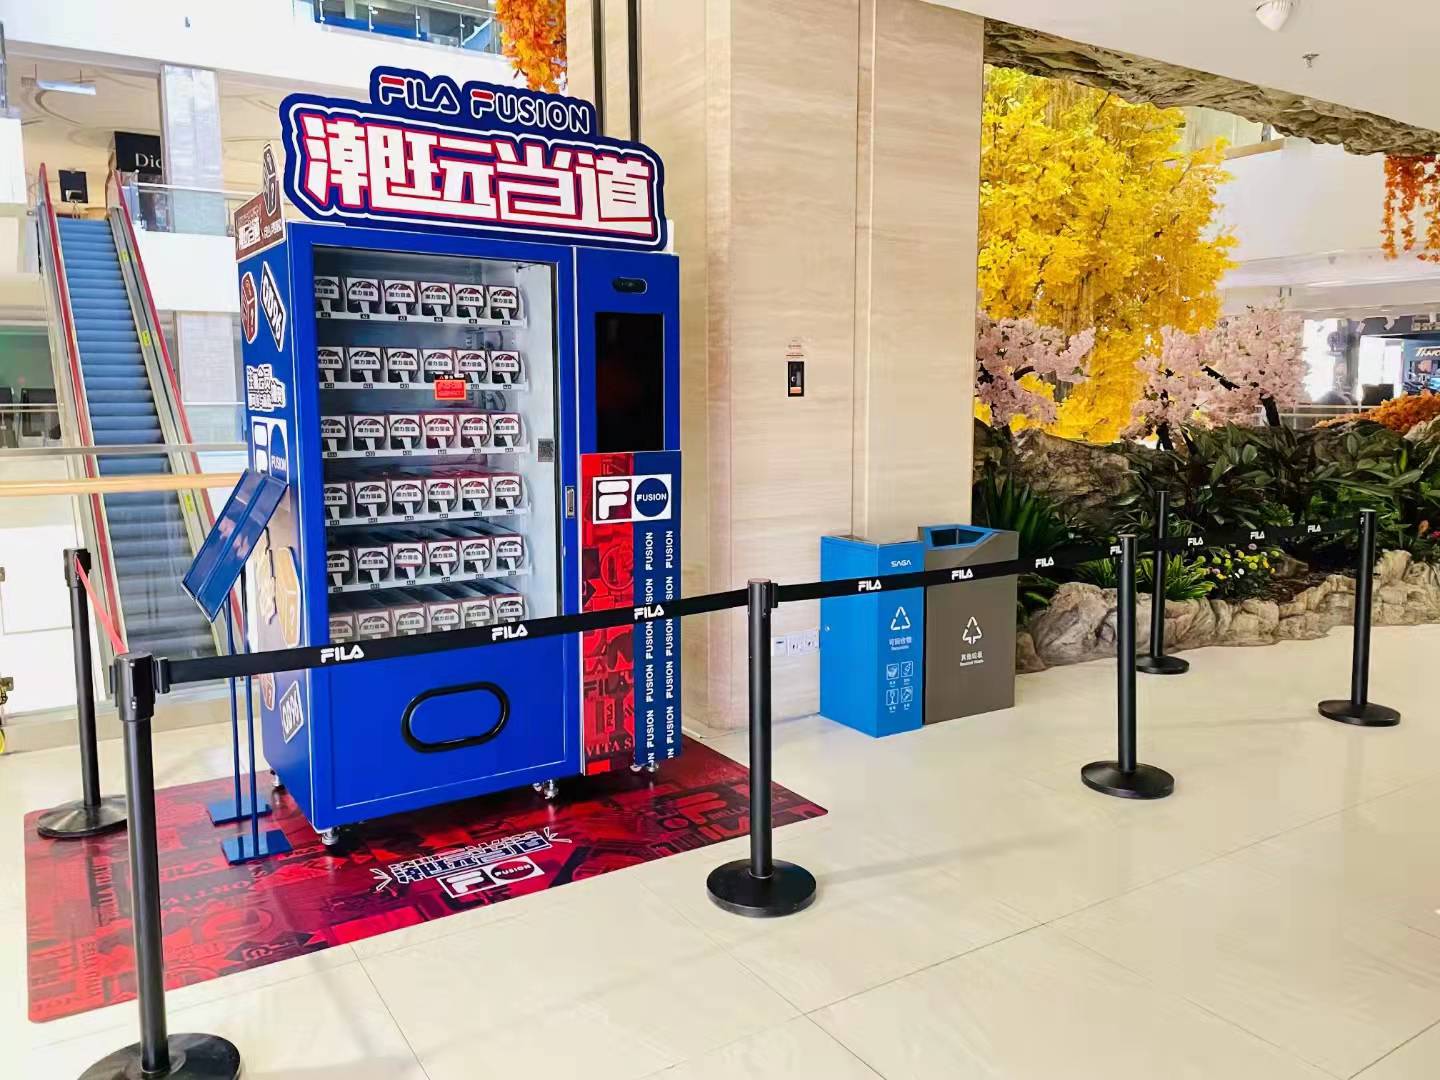 micron smart vending machine